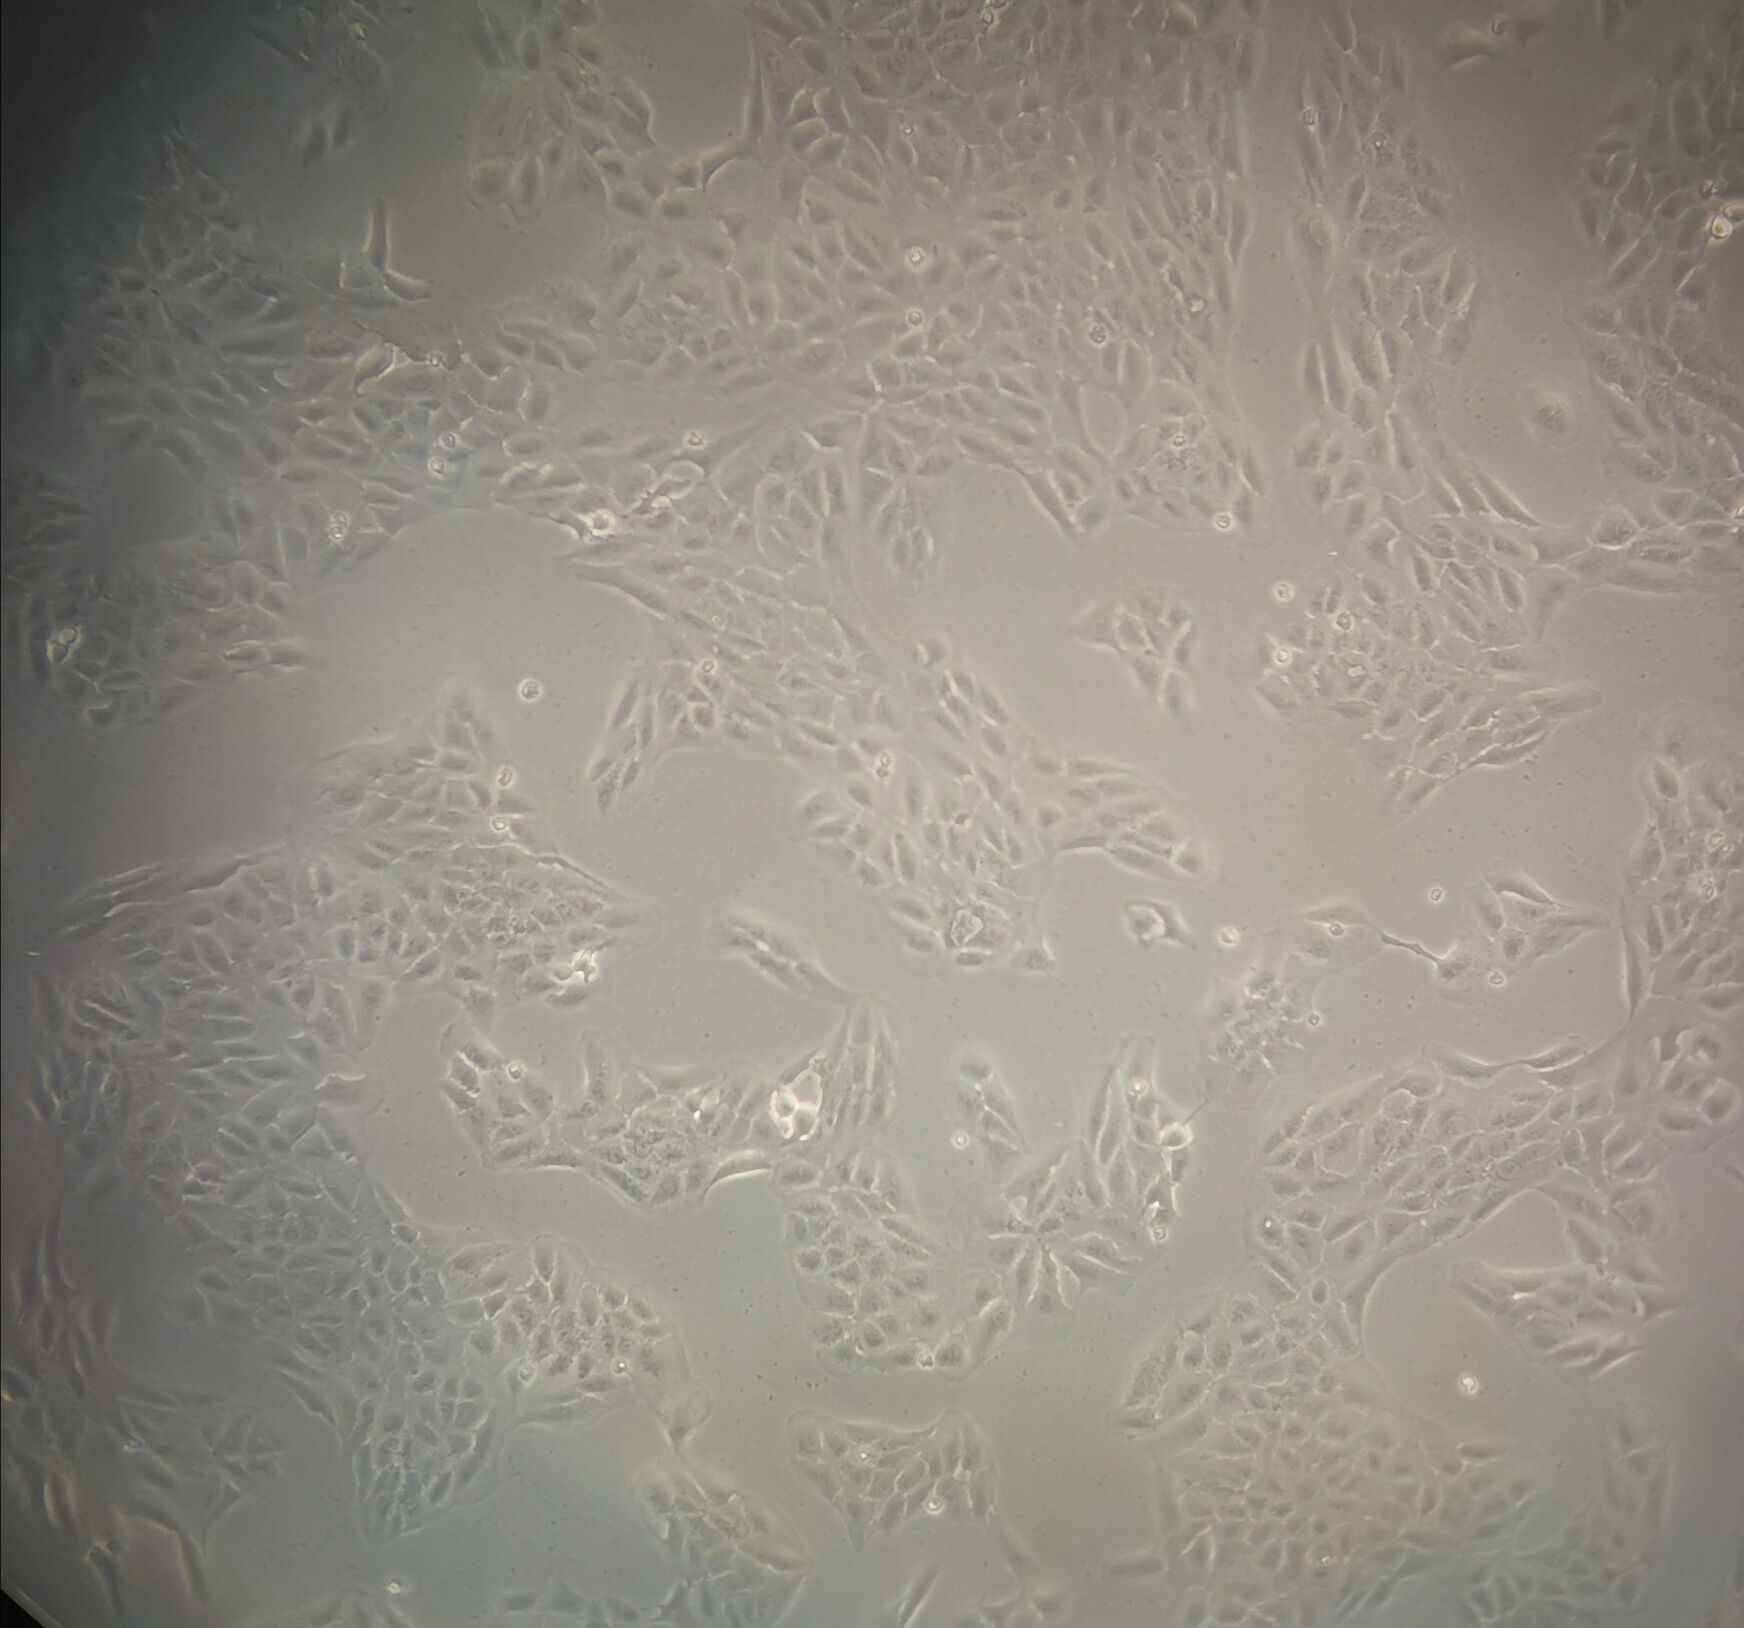 SNU-620 Cells|人胃癌克隆细胞,SNU-620 Cells